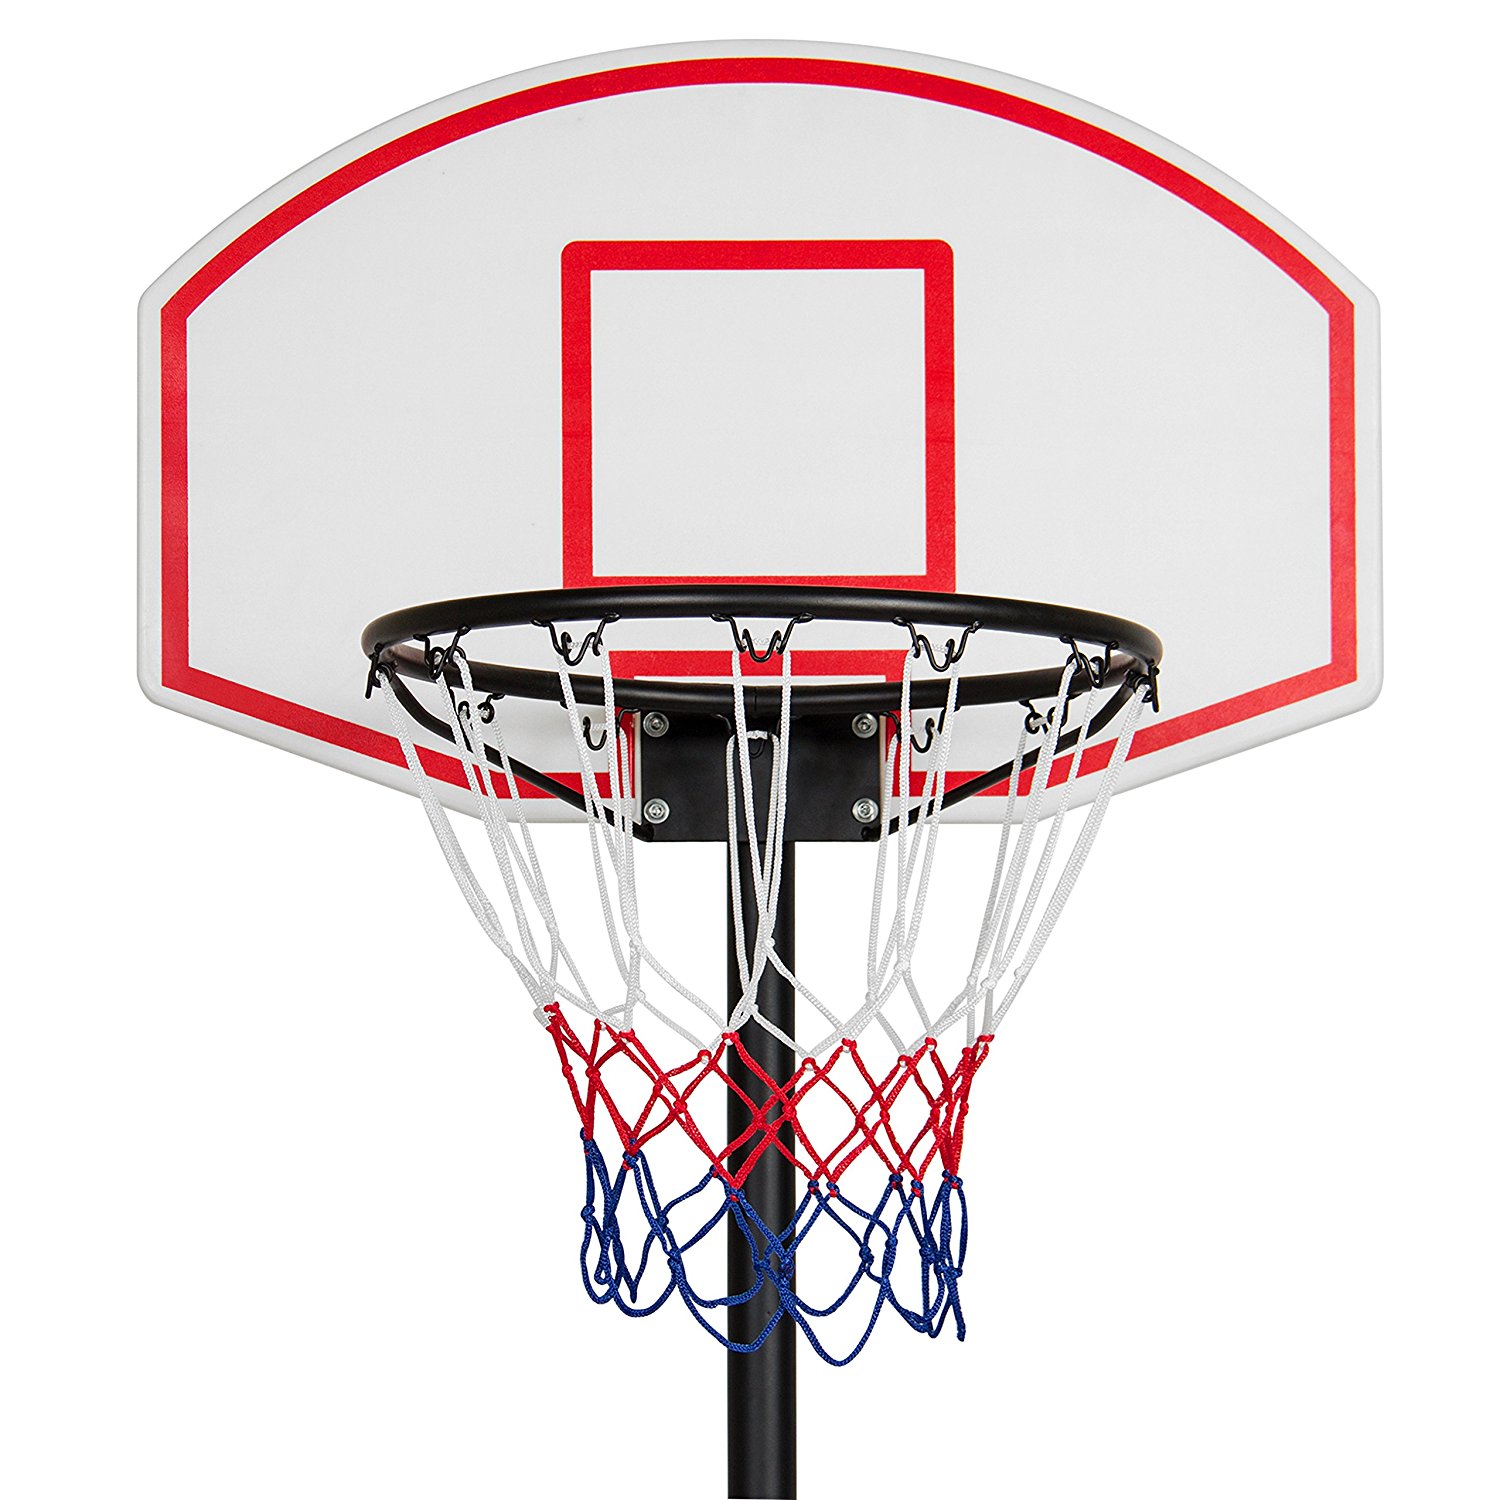 Basketball hoop photo